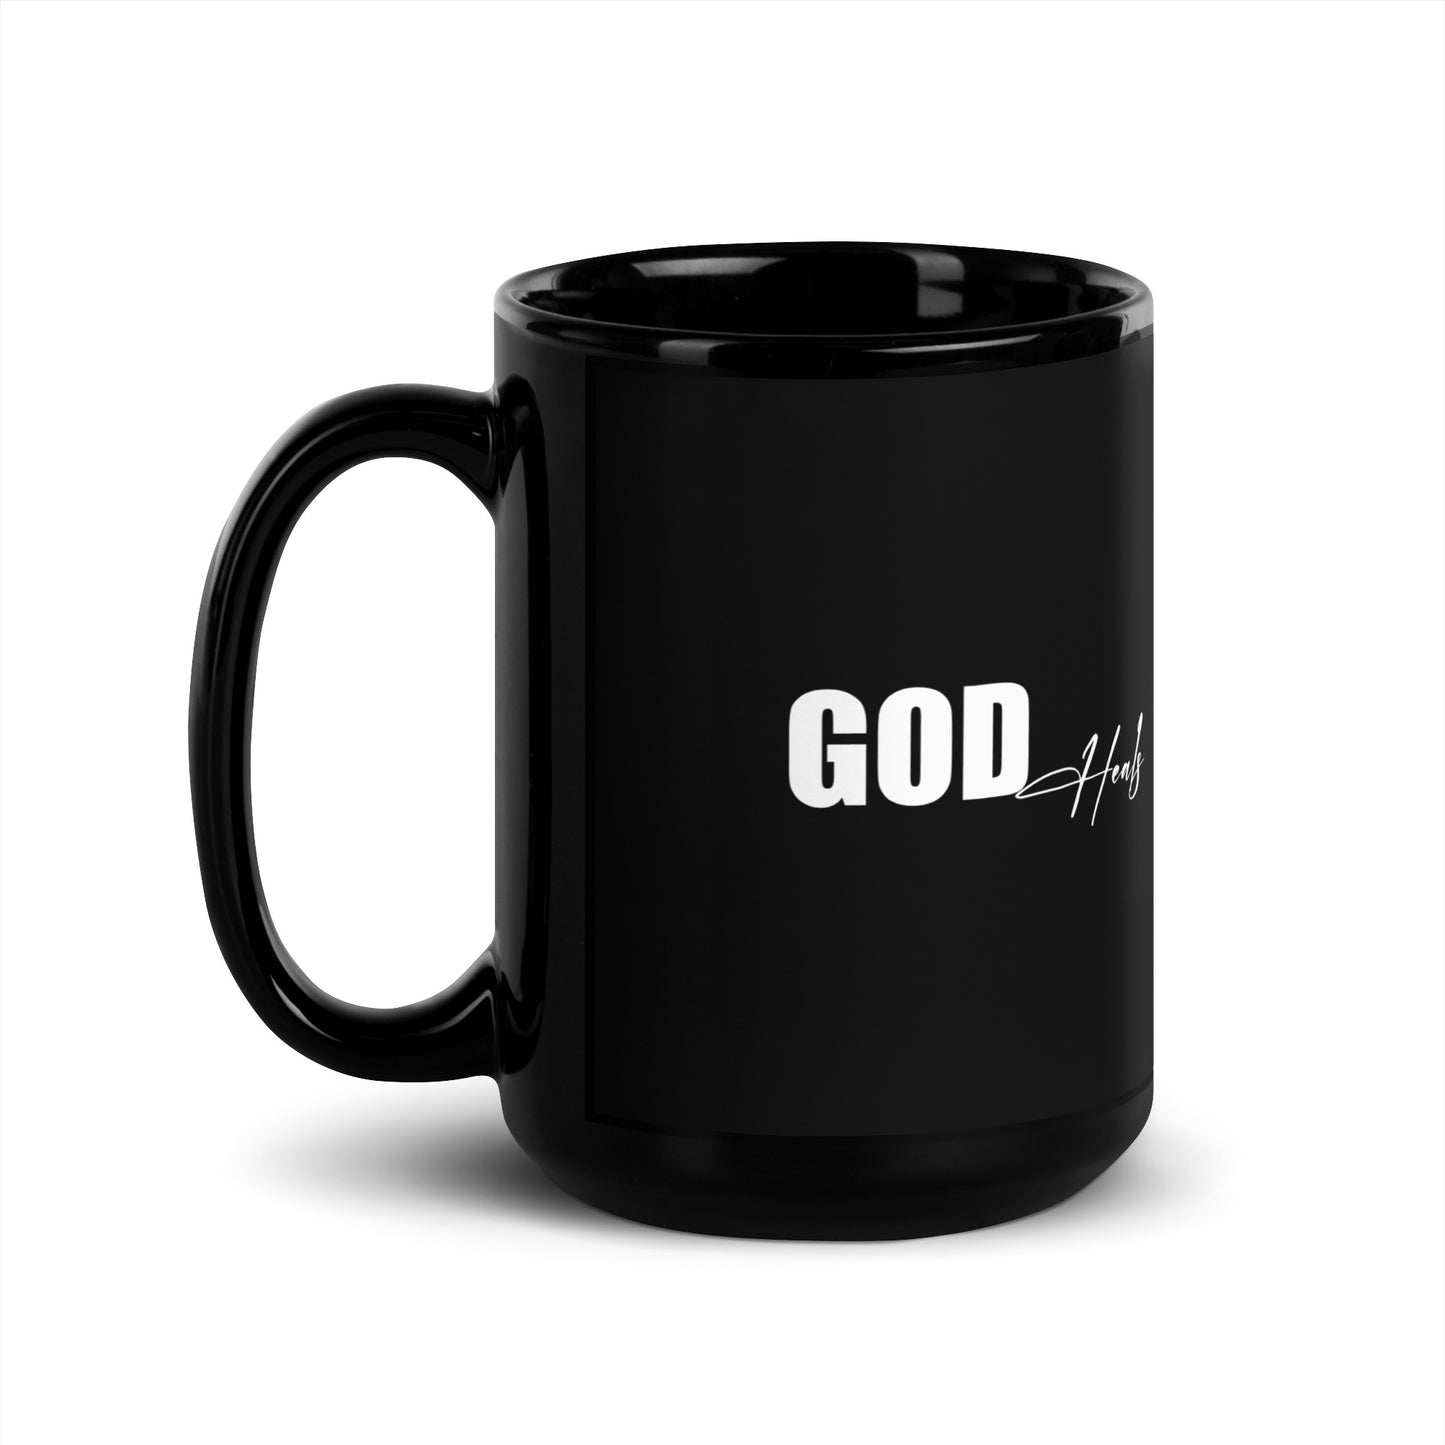 'God Heals" Black Mug